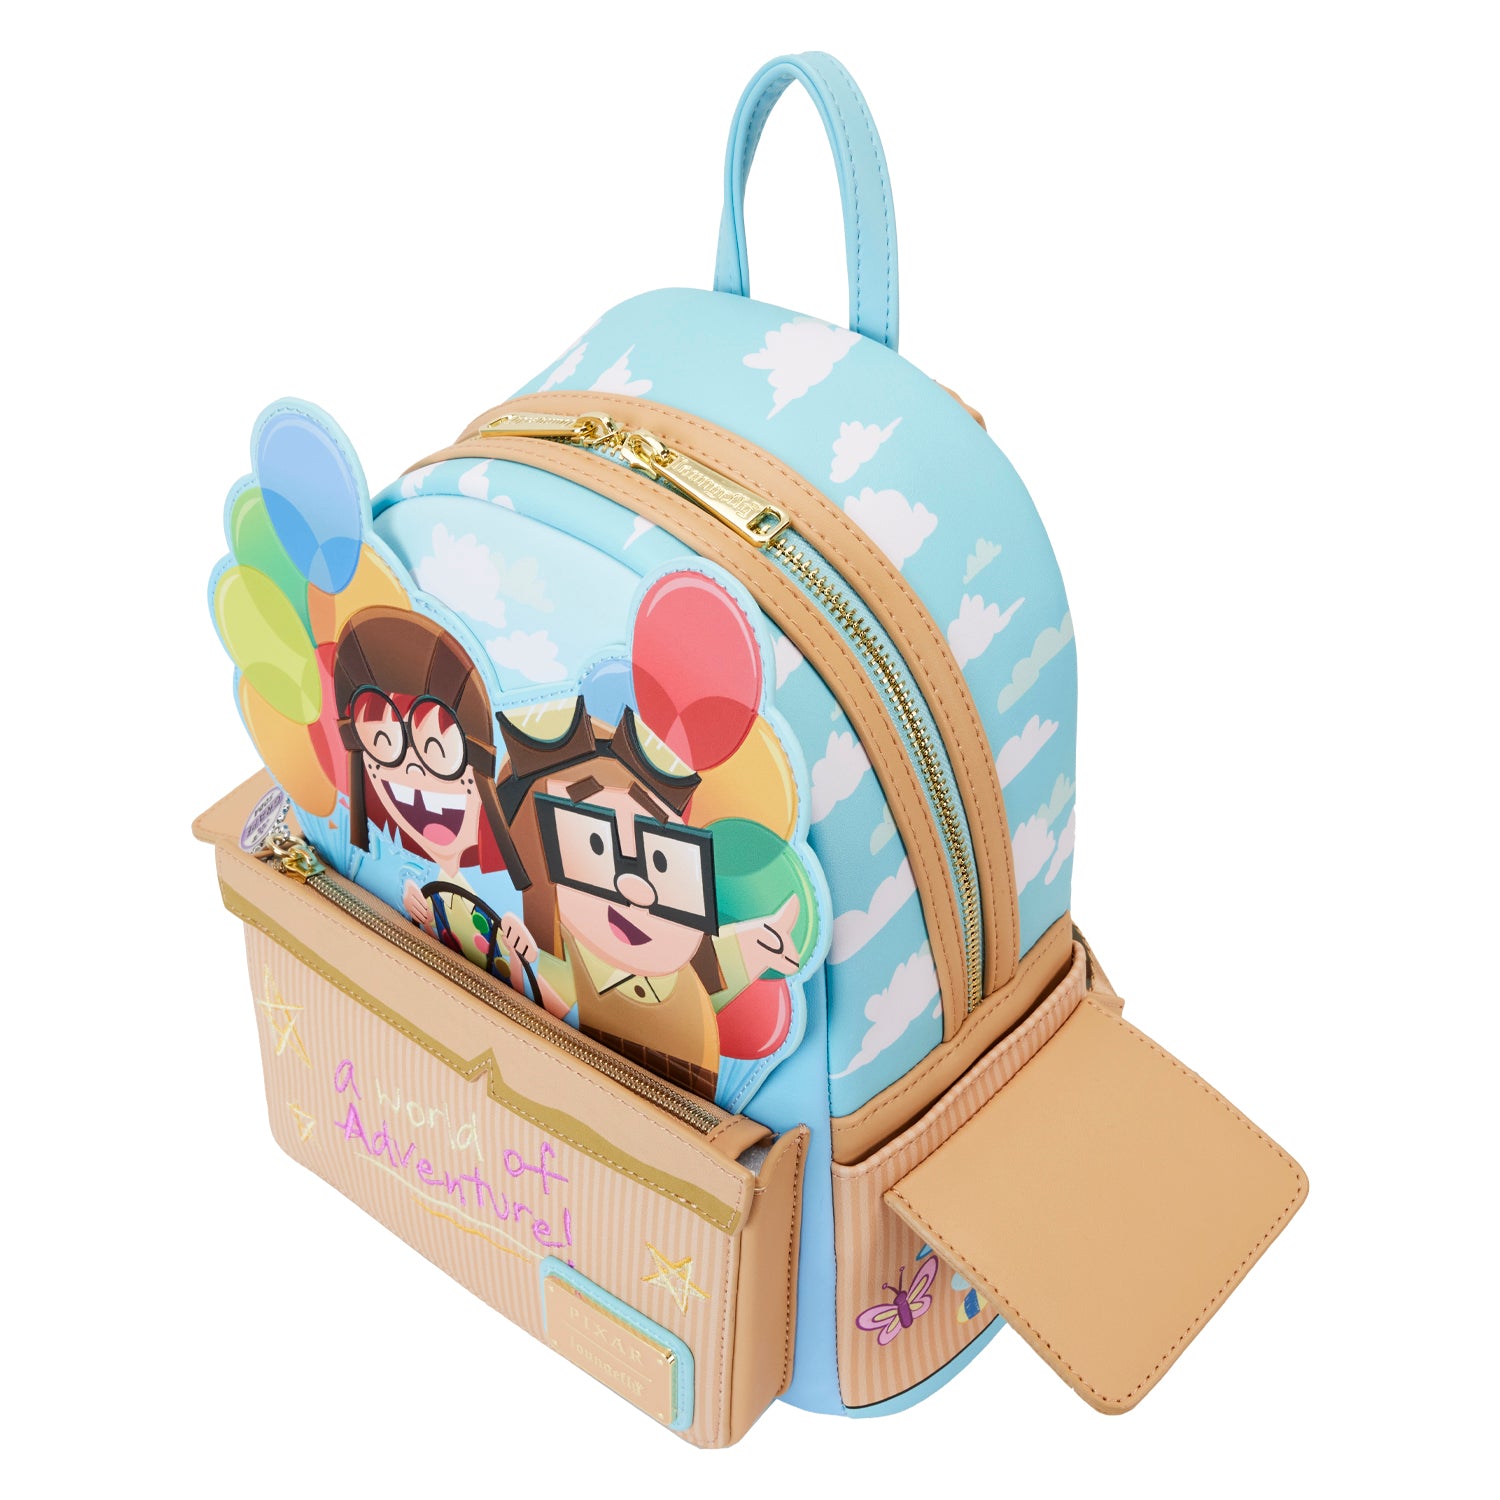 Pixar | Up Spirit of Adventure Mini Backpack